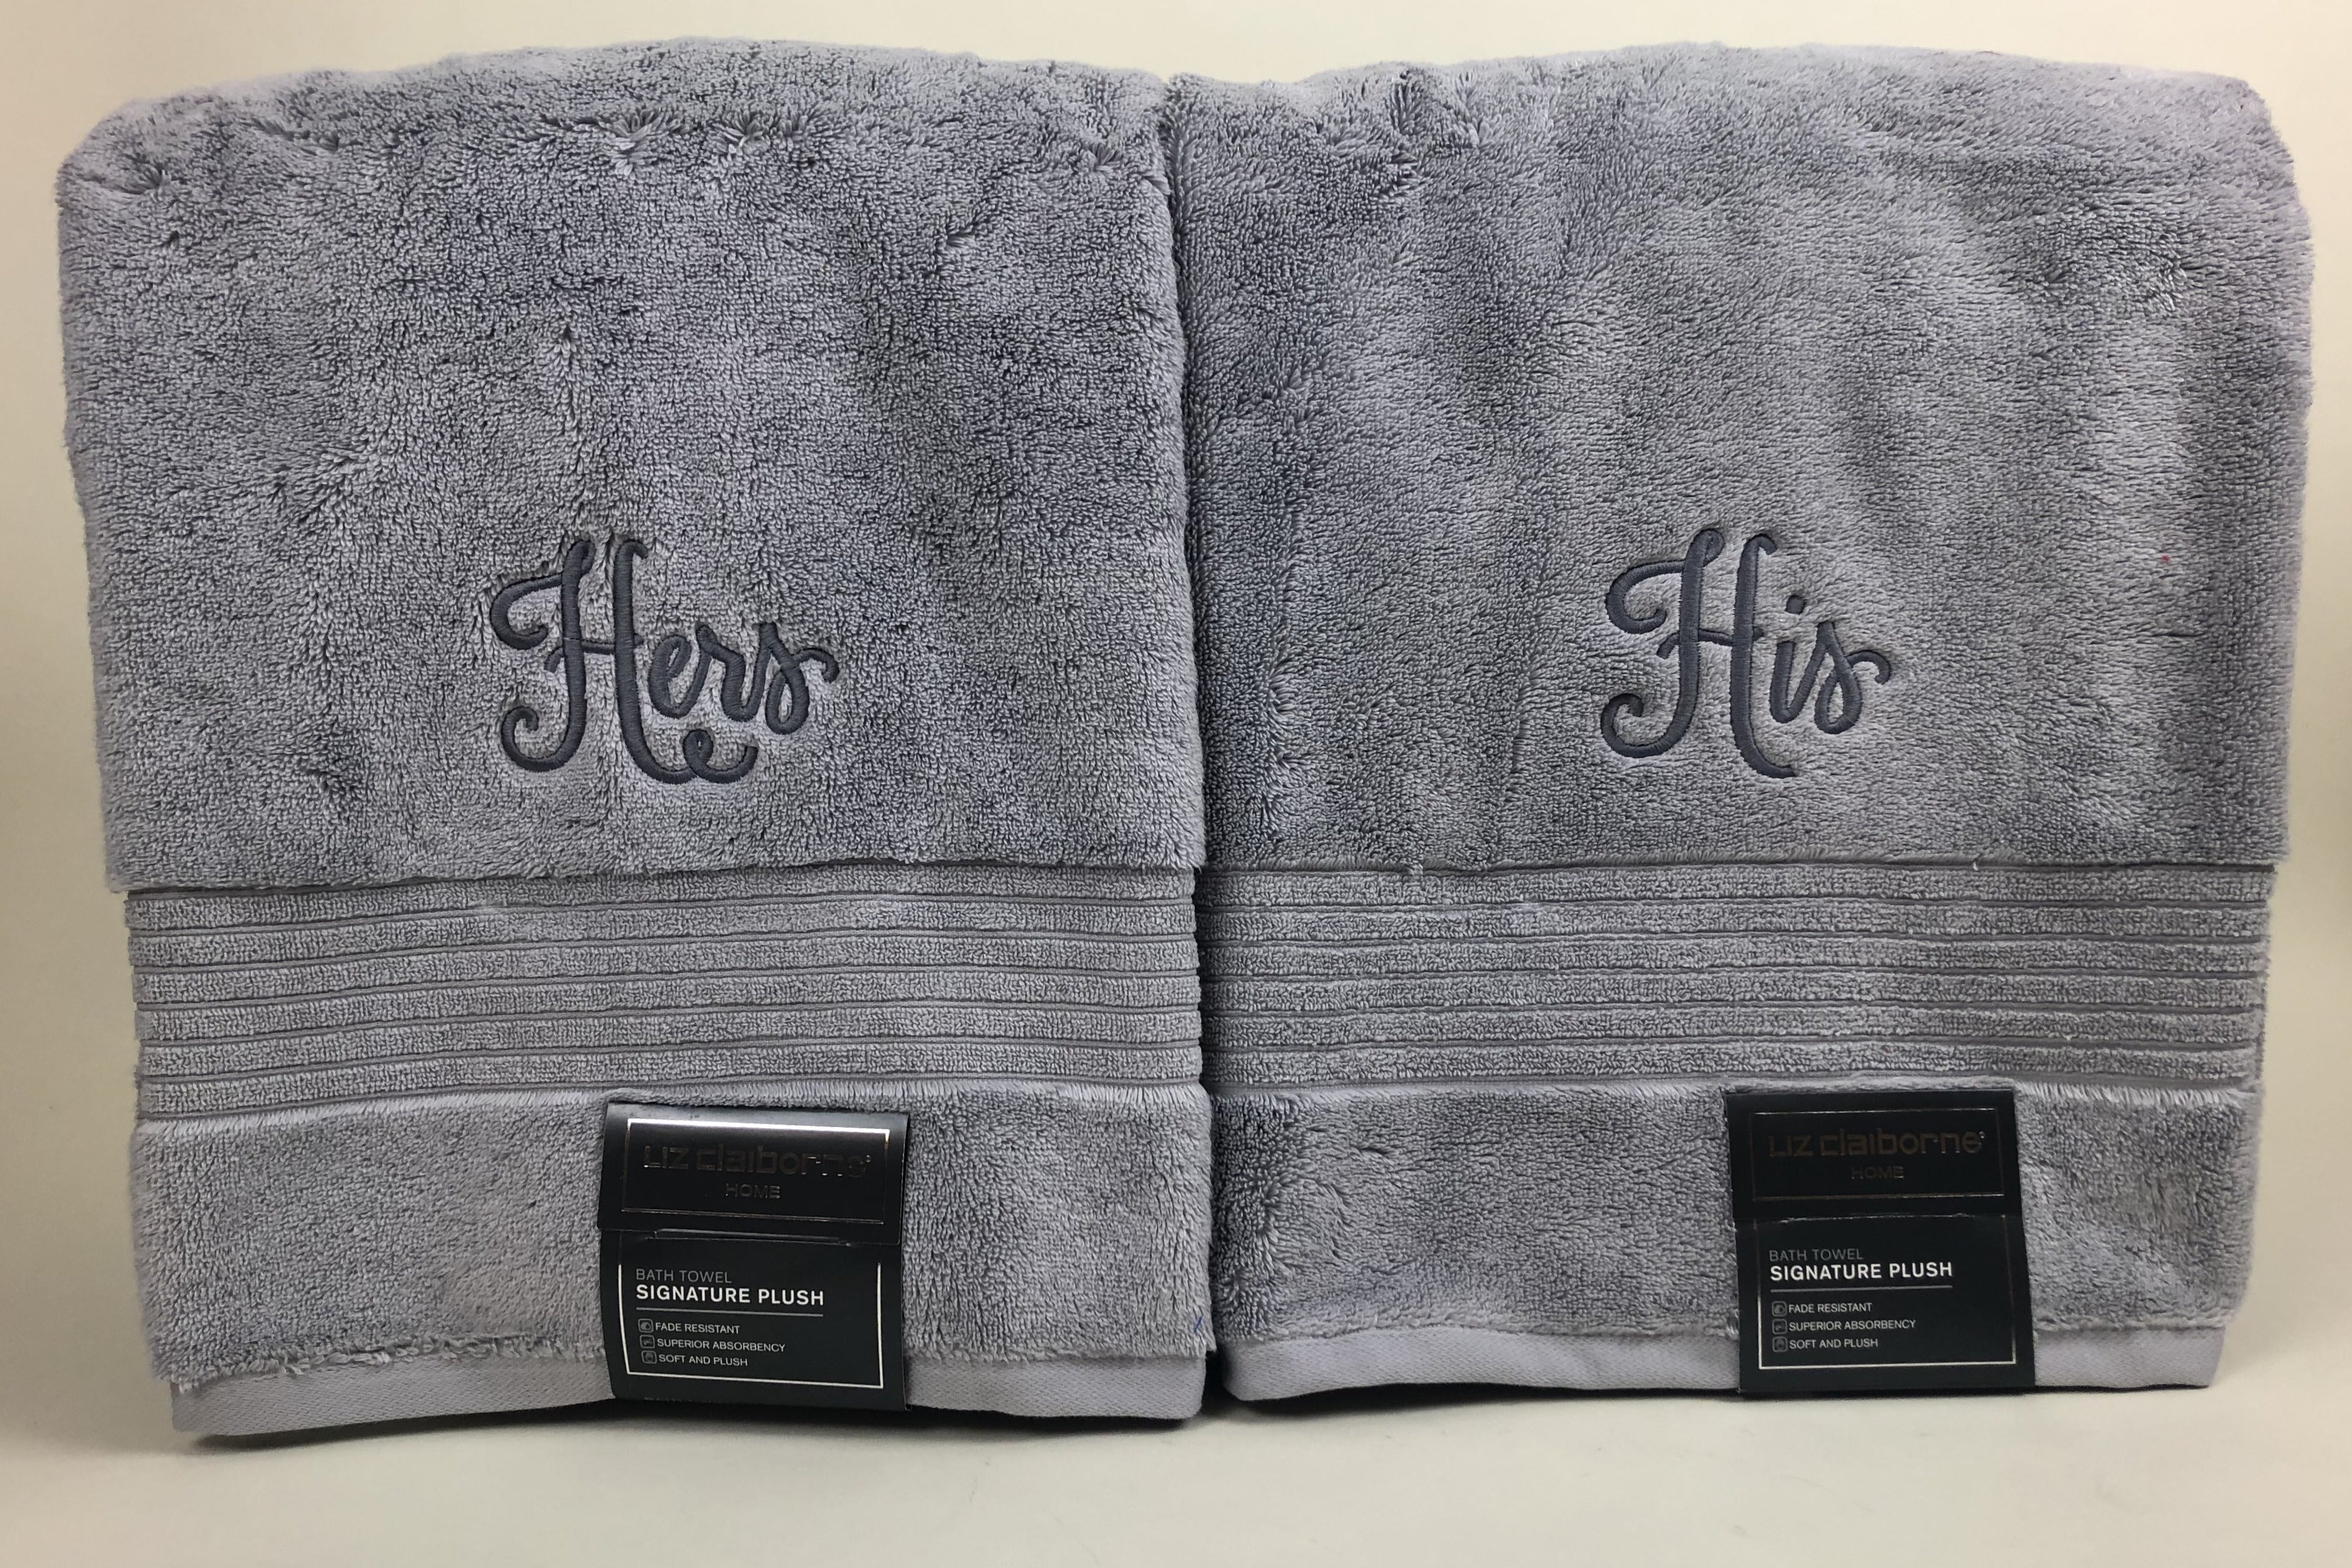 6 Piece Monogrammed Towel Set - Excellent Gift for Grads, New